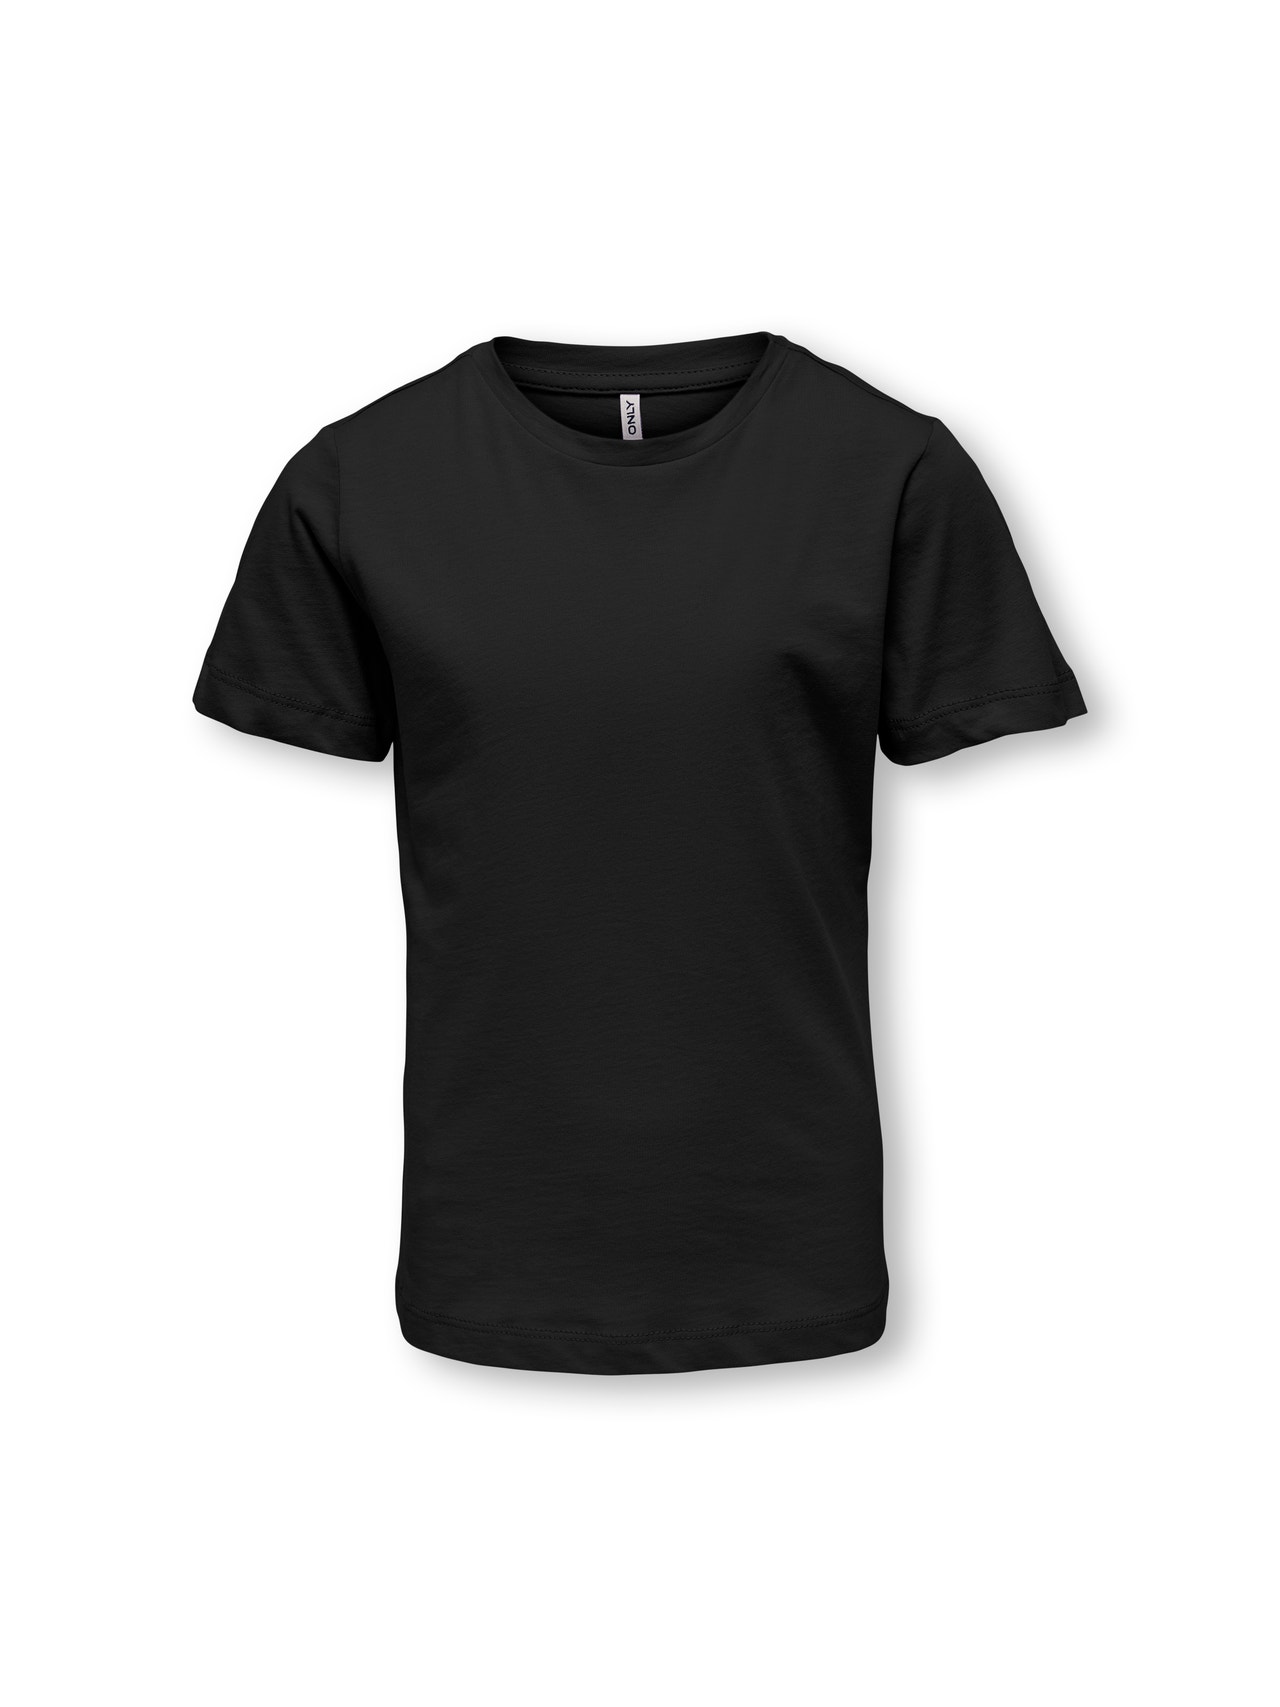 ONLY o-neck t-shirt -Black - 15281565